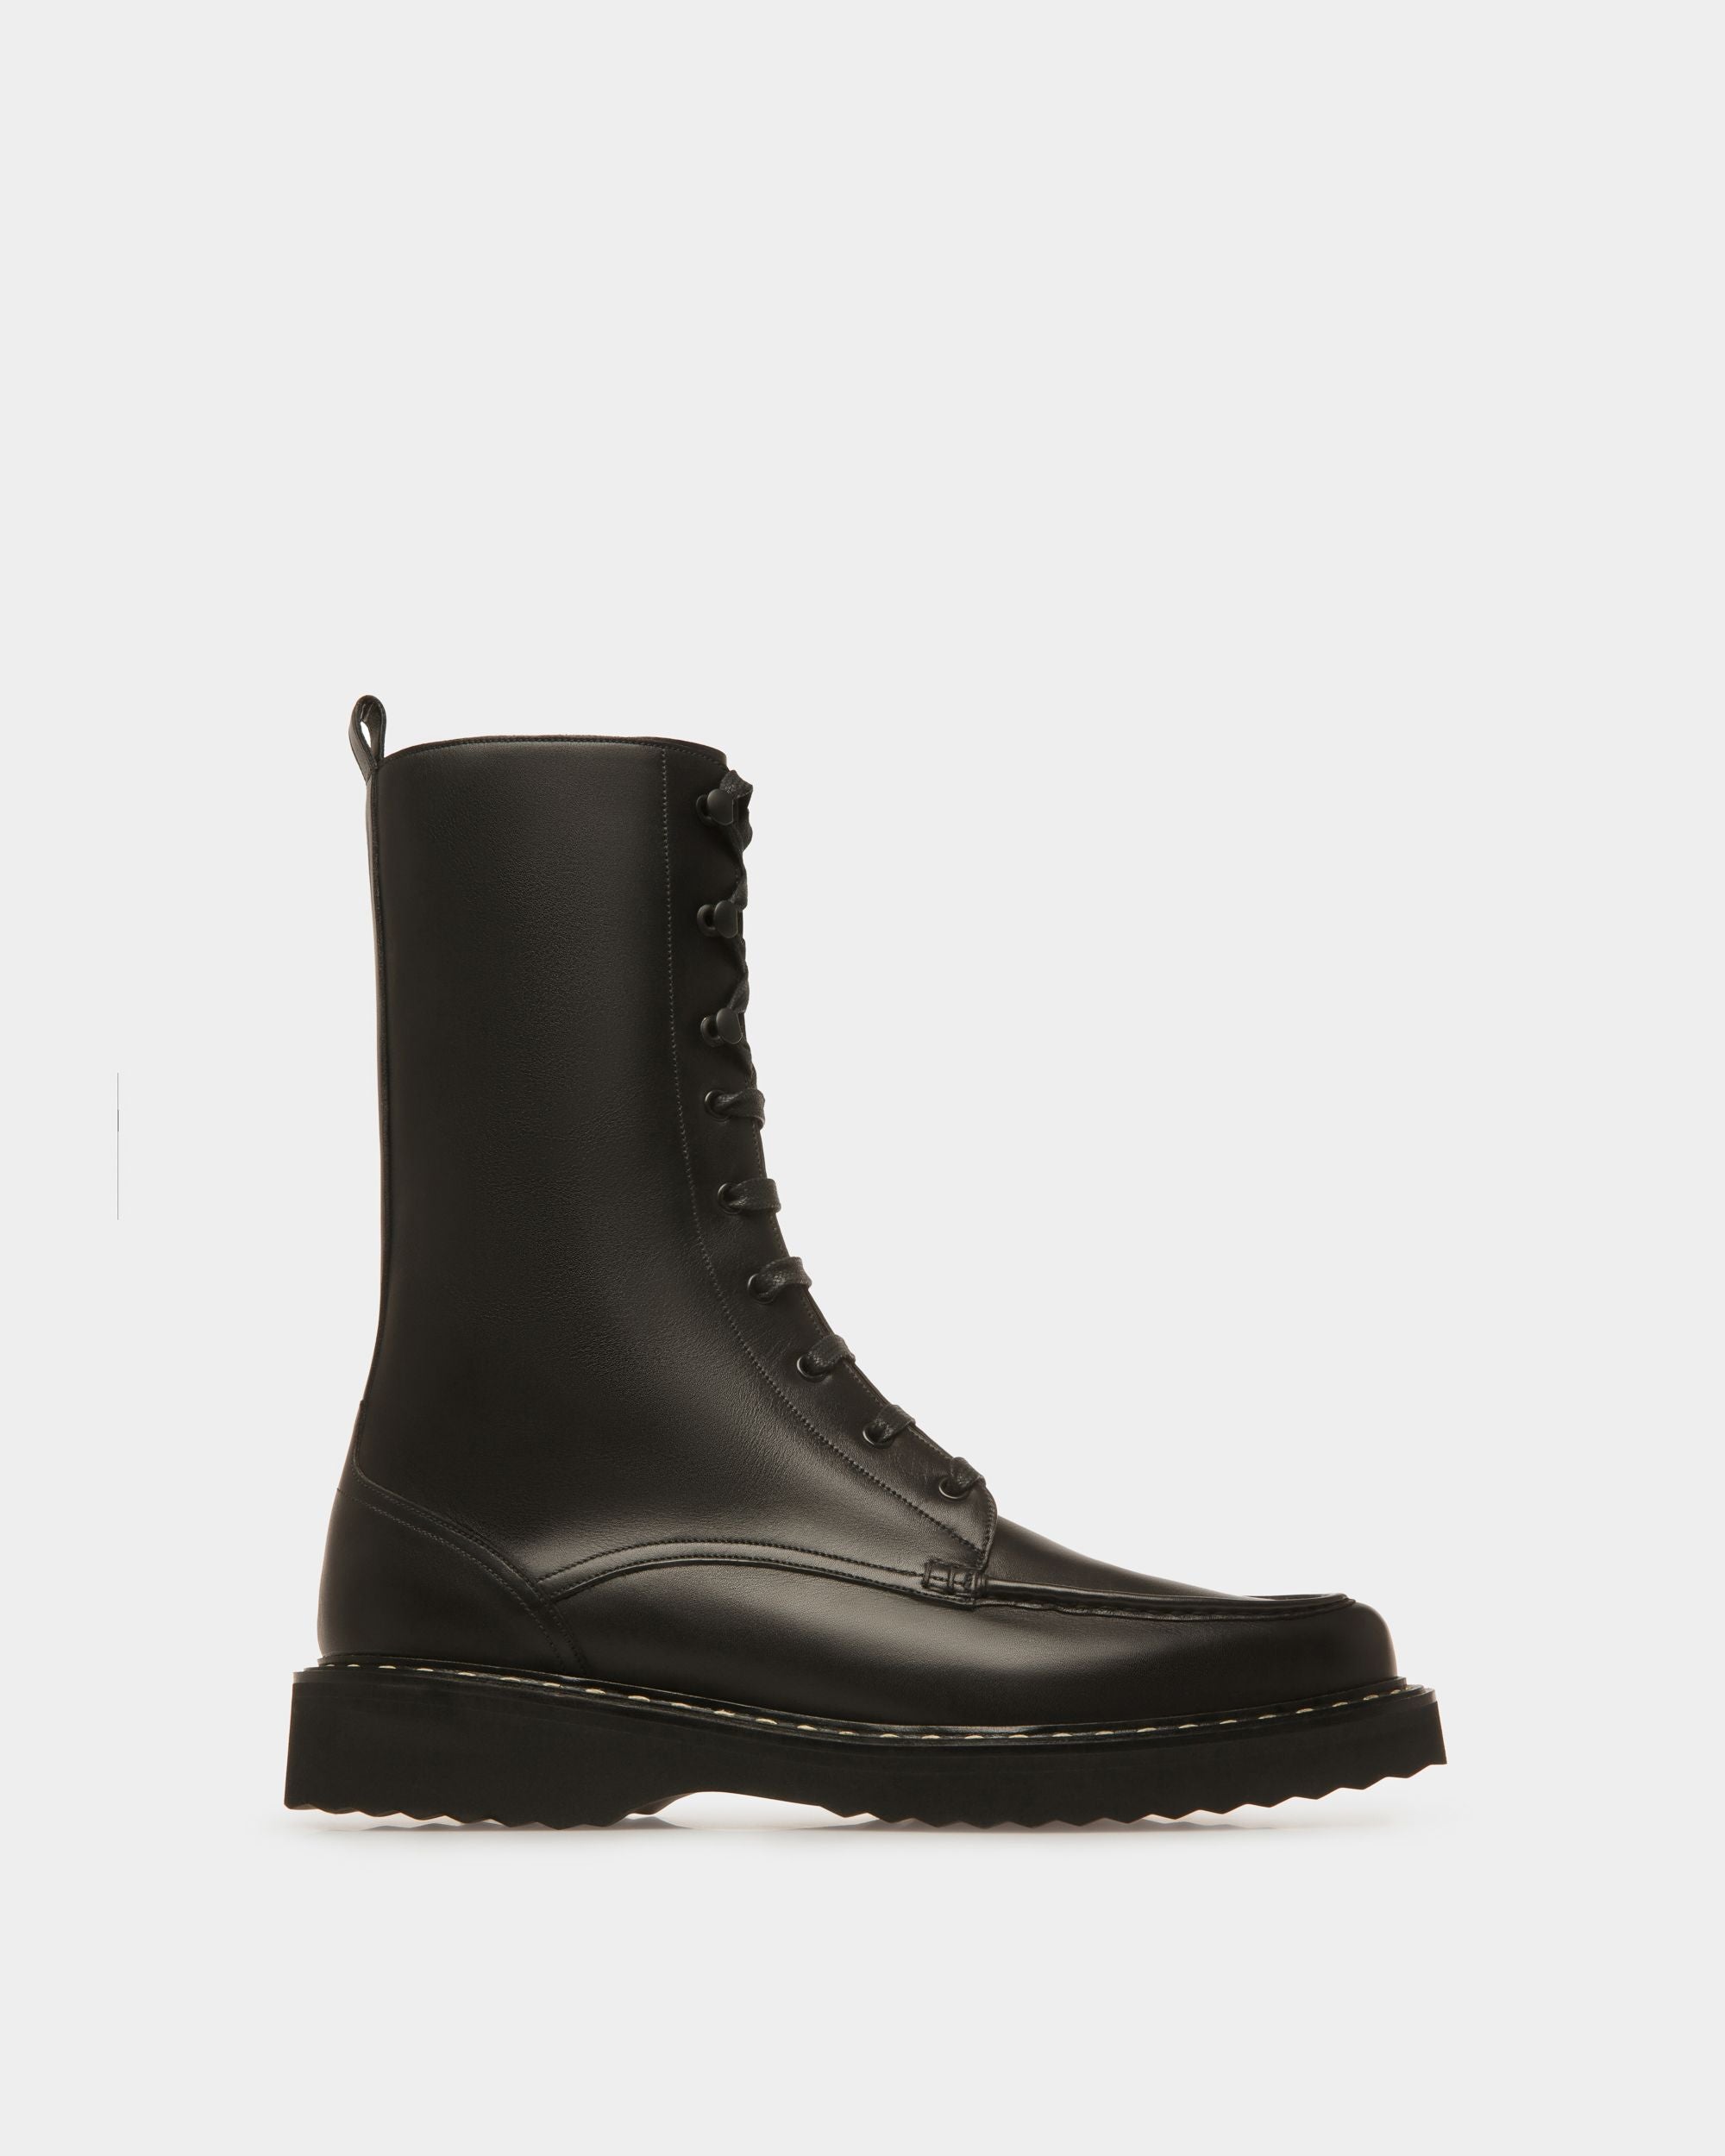 Novarno | Men's Boots | Black Leather | Bally | Still Life Side